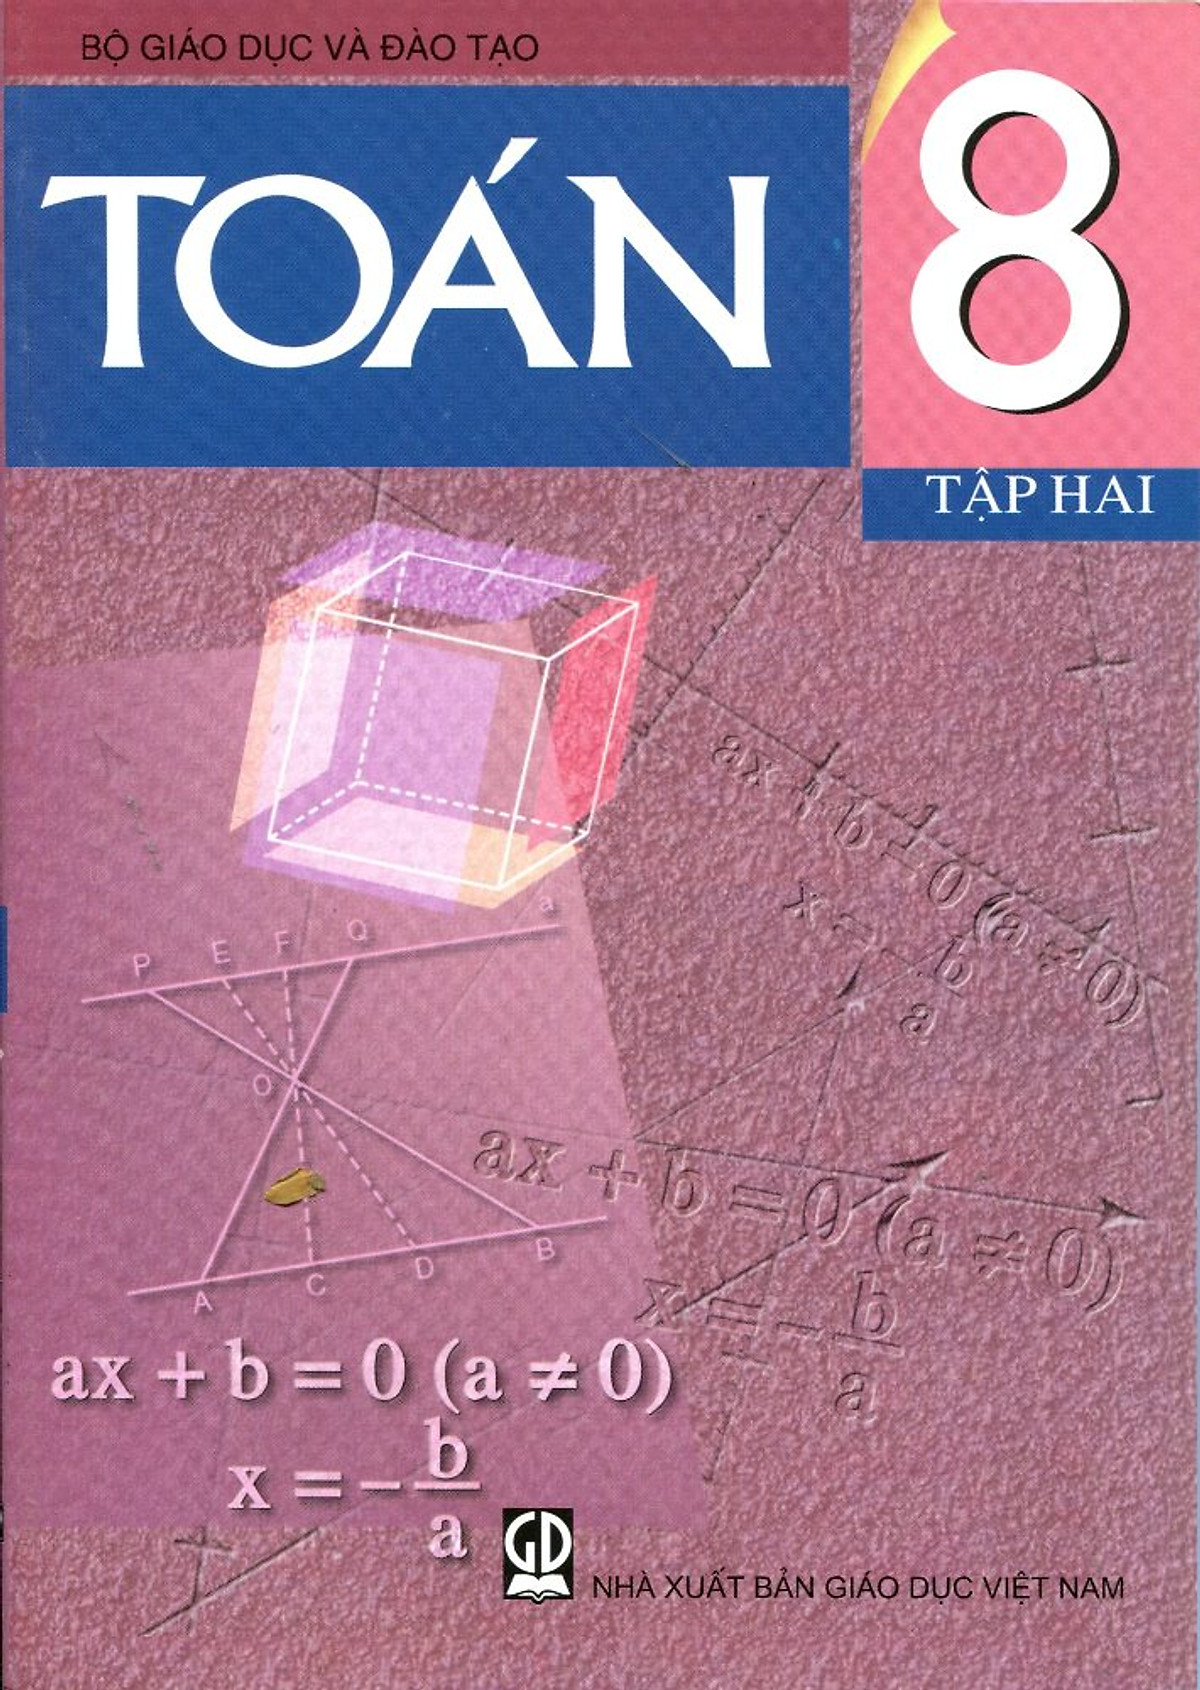 toan-8-tap-2-517